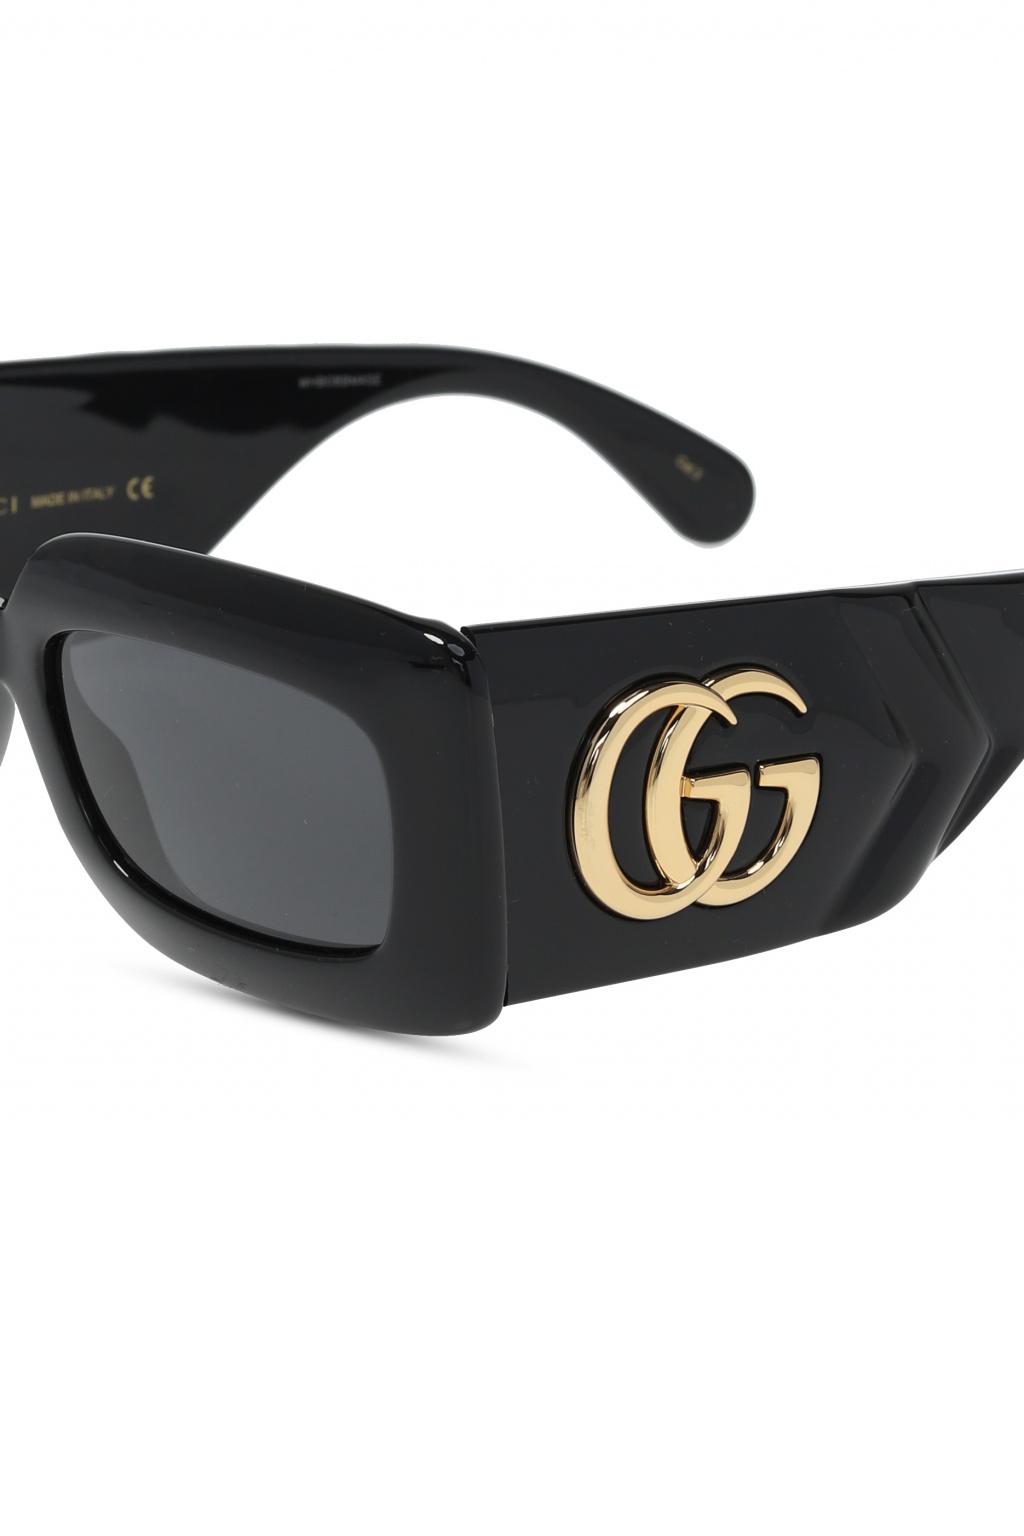 Sunglasses With Logo Gucci Vitkac Singapore